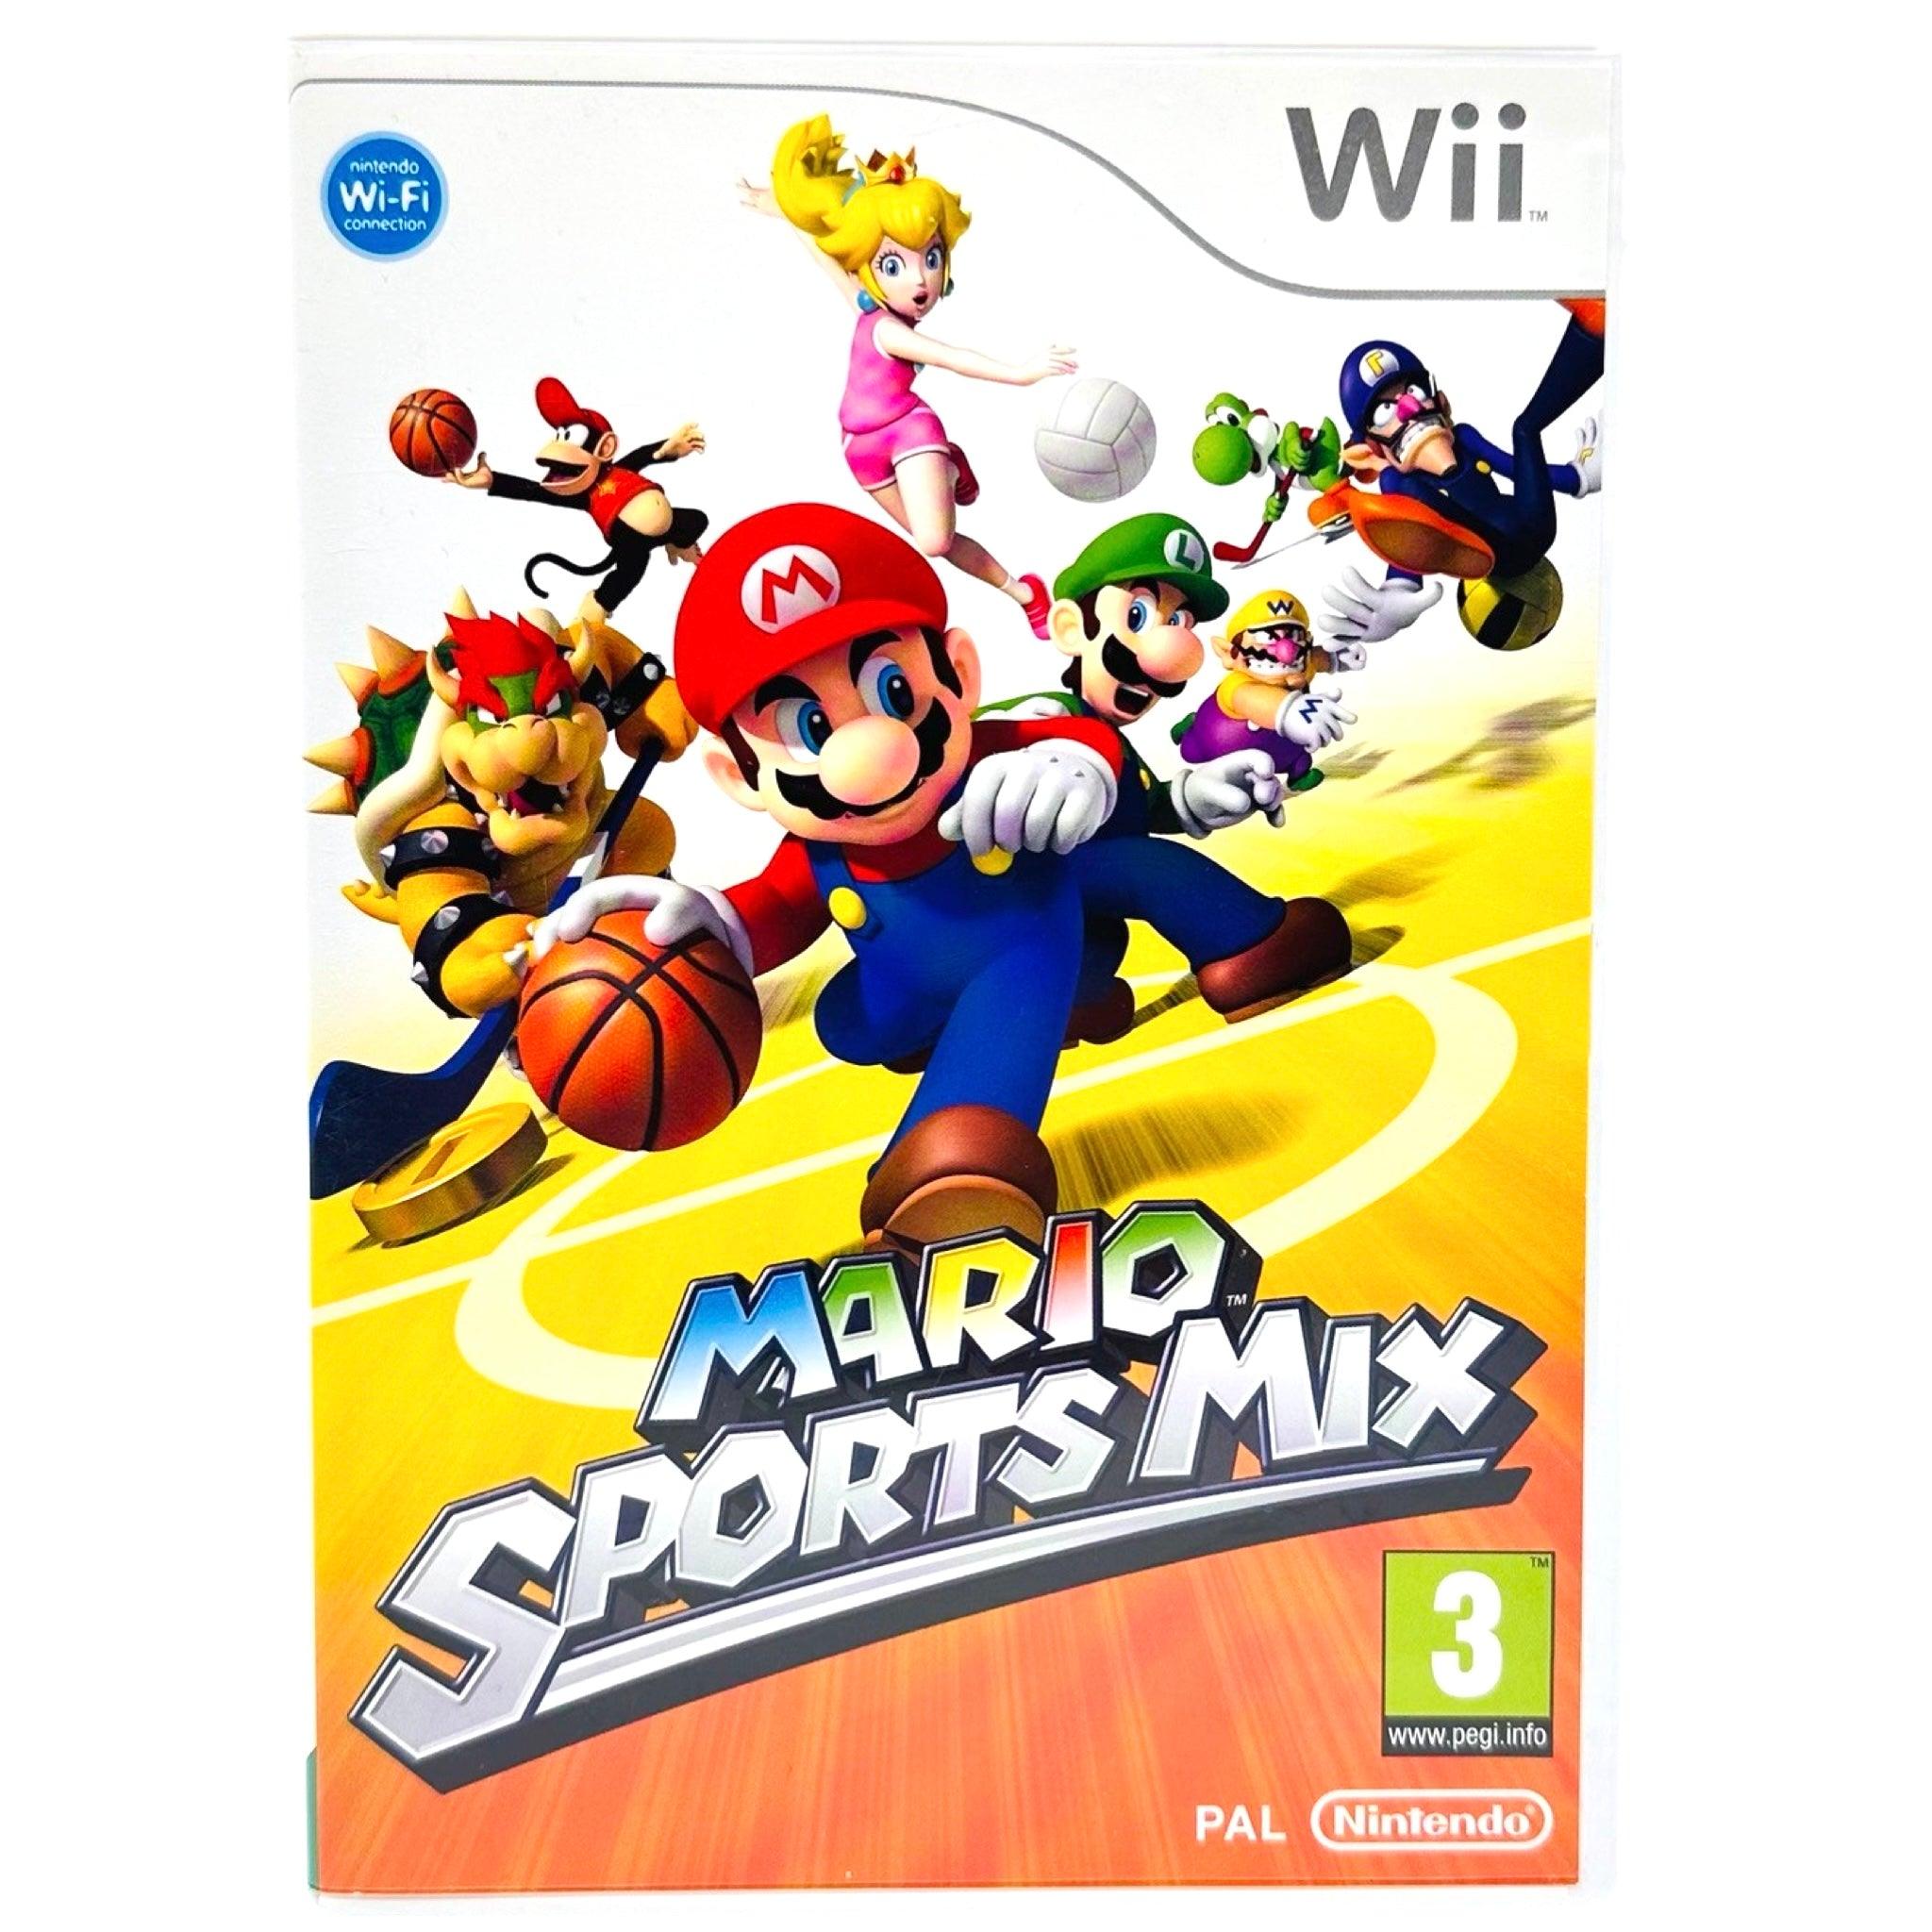 Wii: Mario Sports Mix - RetroGaming.no